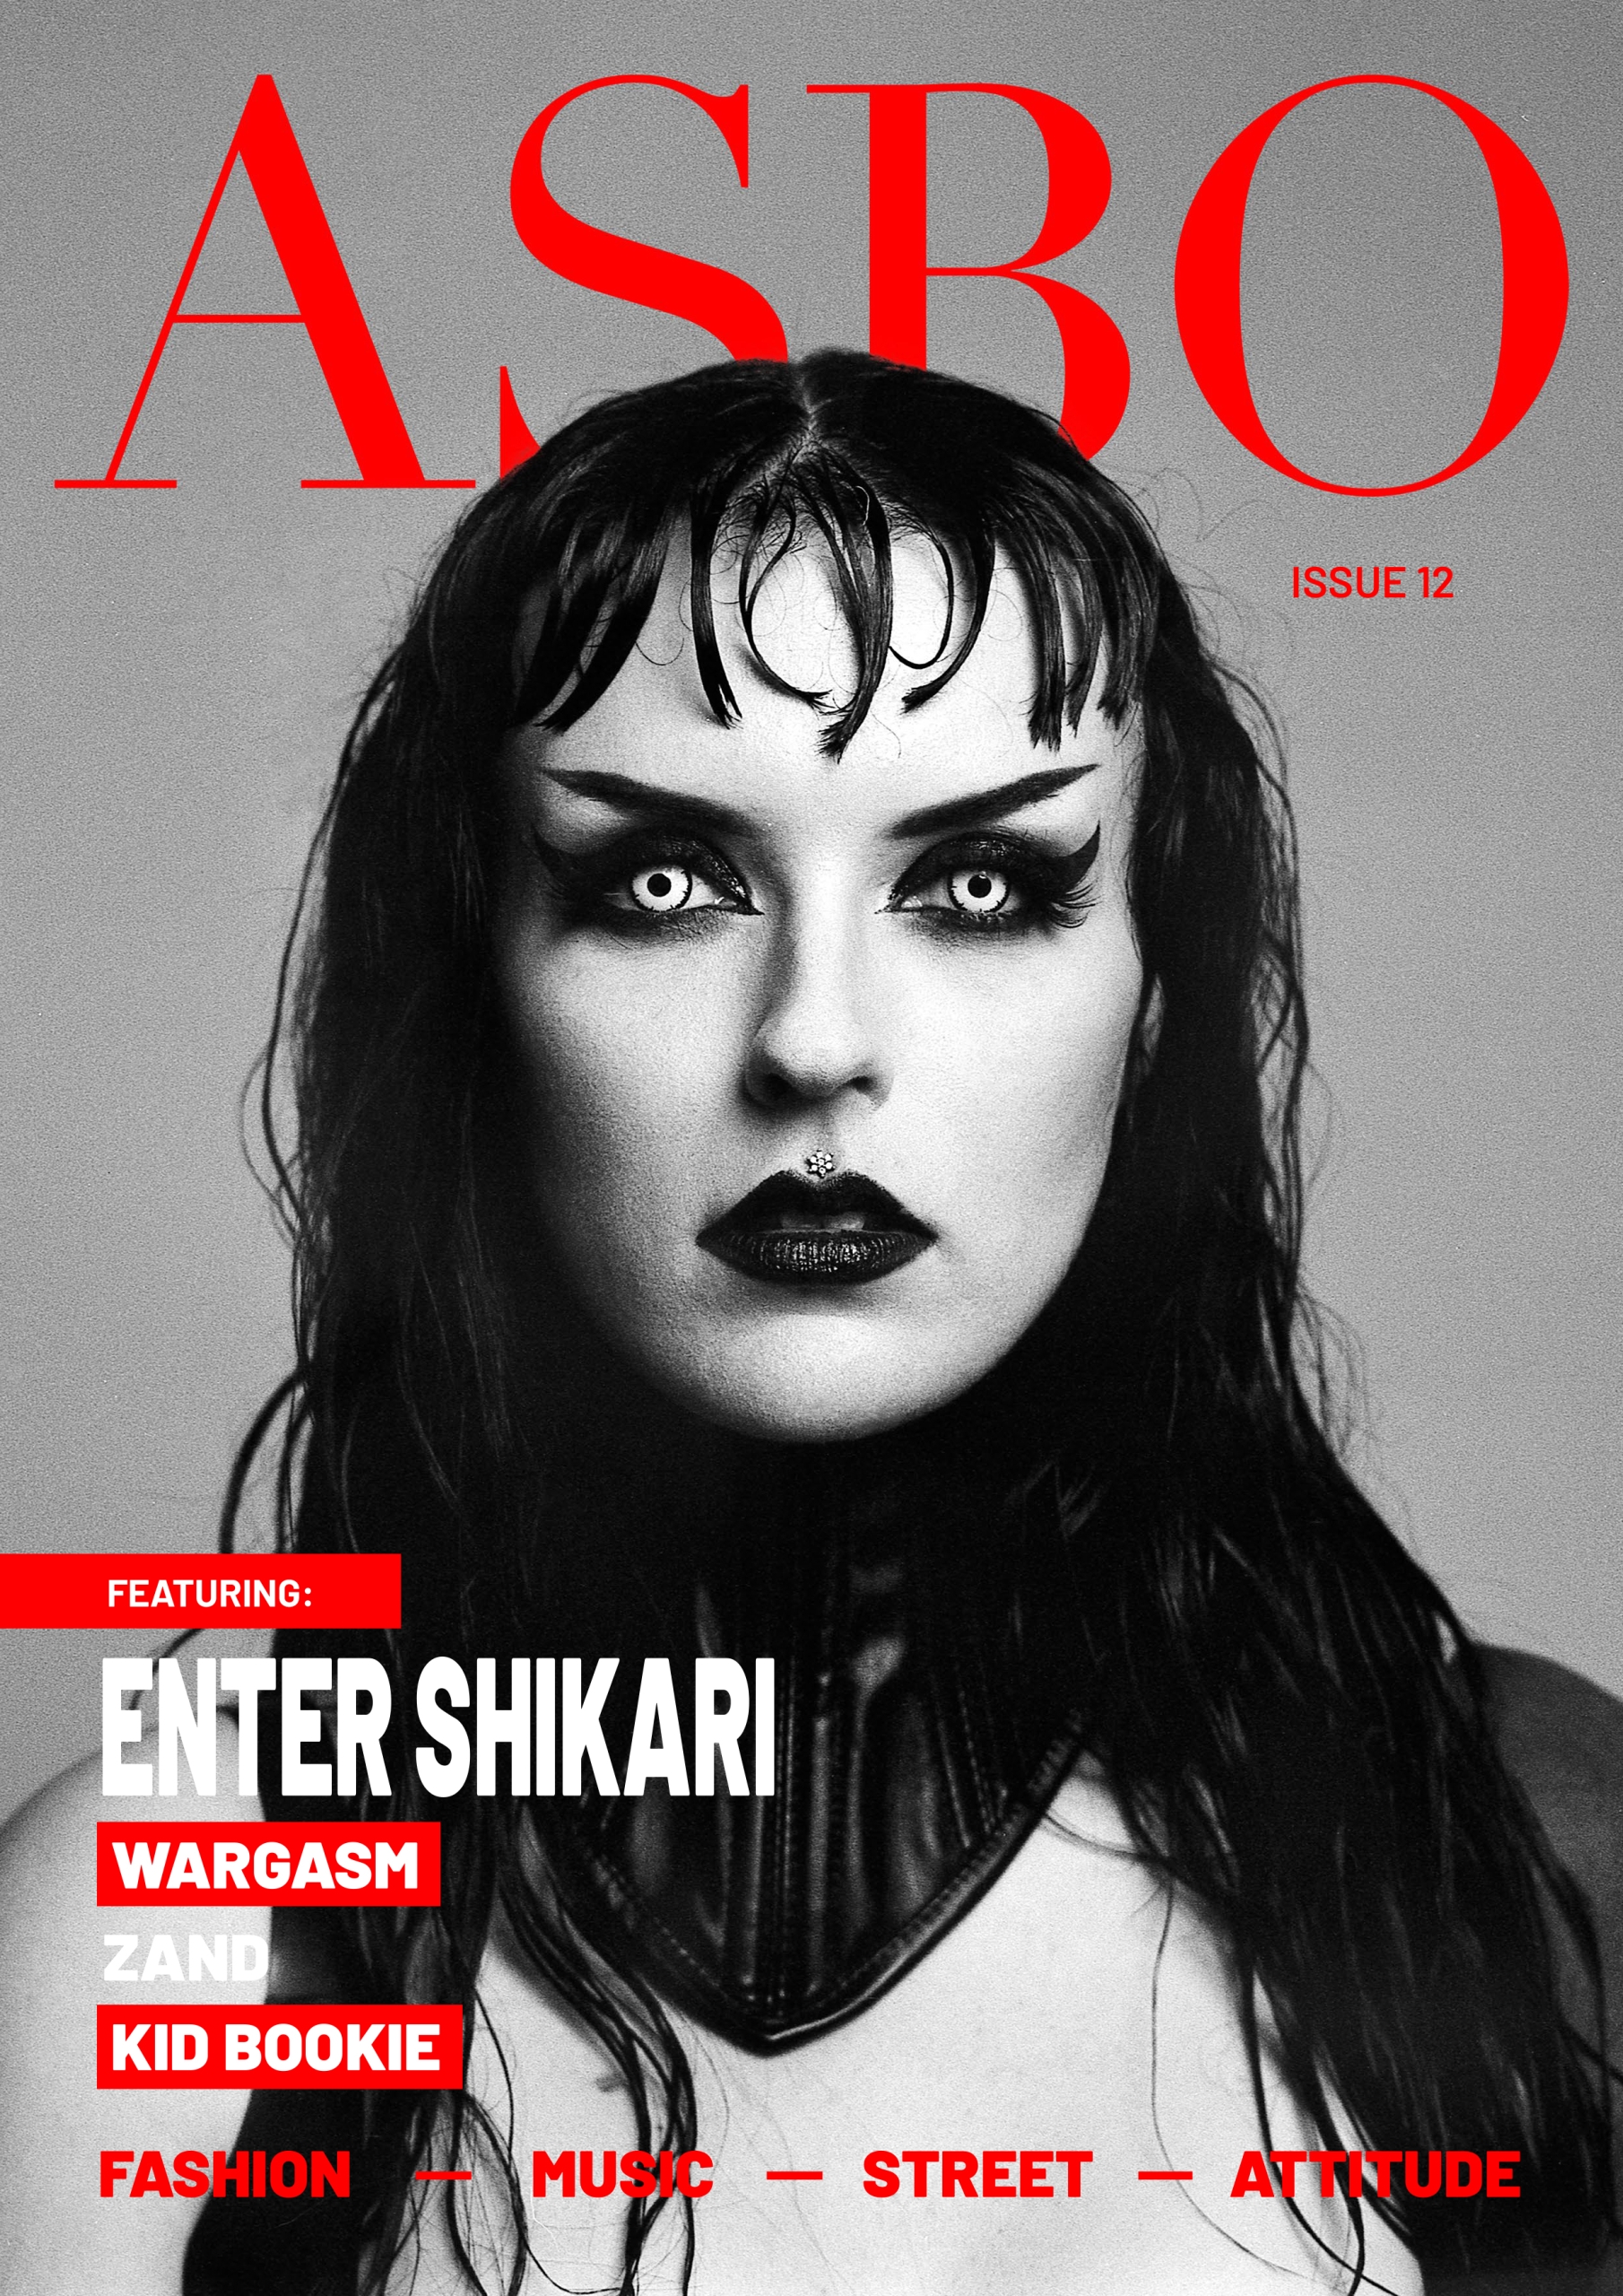 ASBO Magazine Issue 12 Harpy Digital by Max Auberon